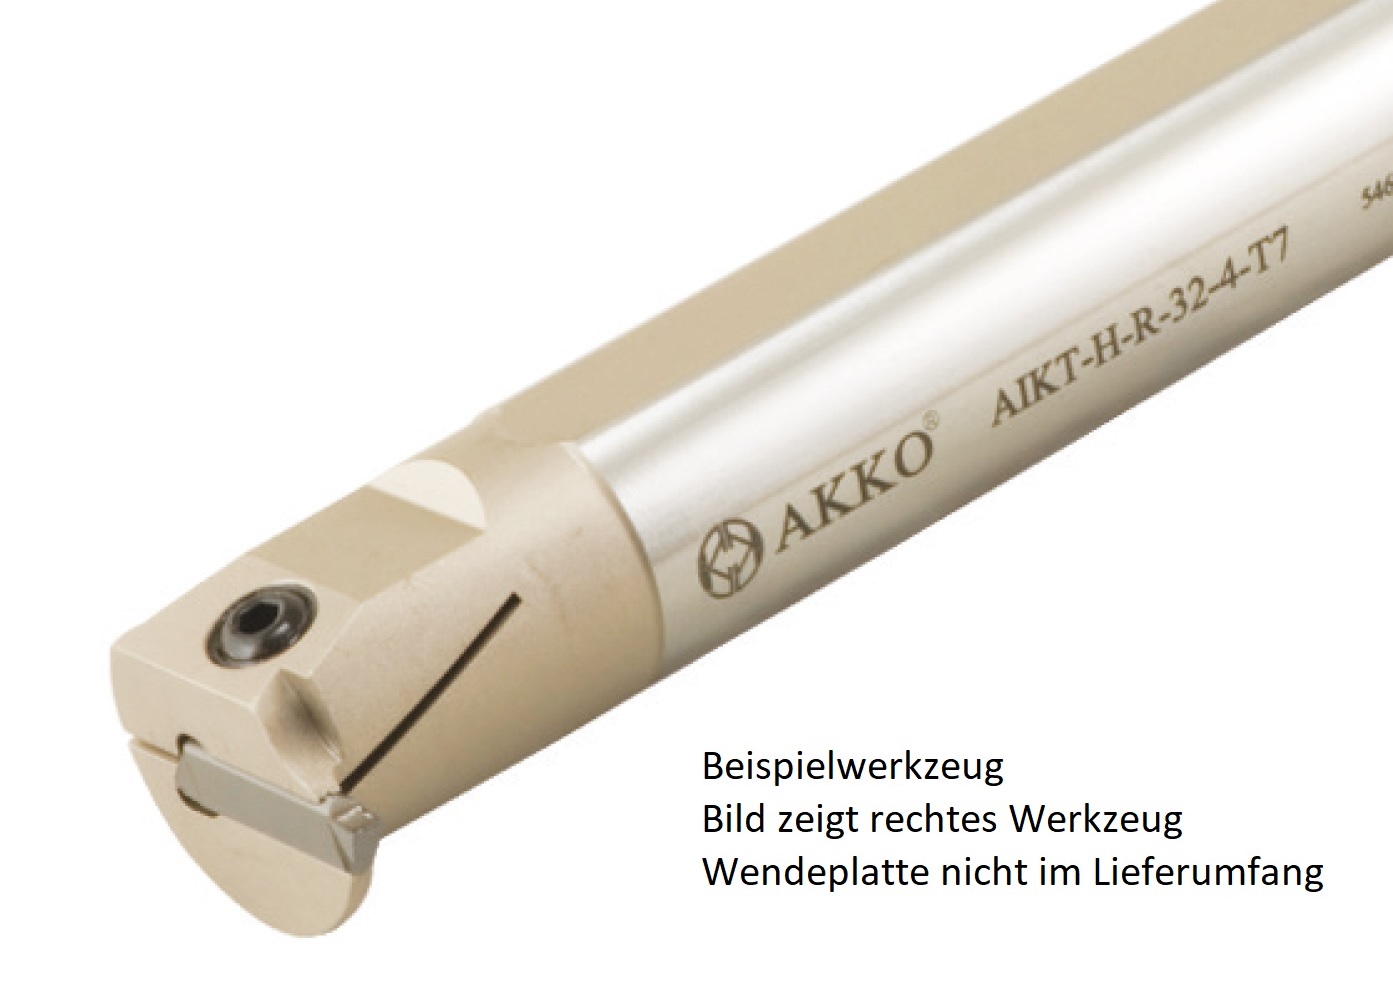 AKKO-Innen-Stechhalter, kompatibel mit Horn-Stechplatte S229-4
Schaft-ø 32, ohne Innenkühlung, rechts